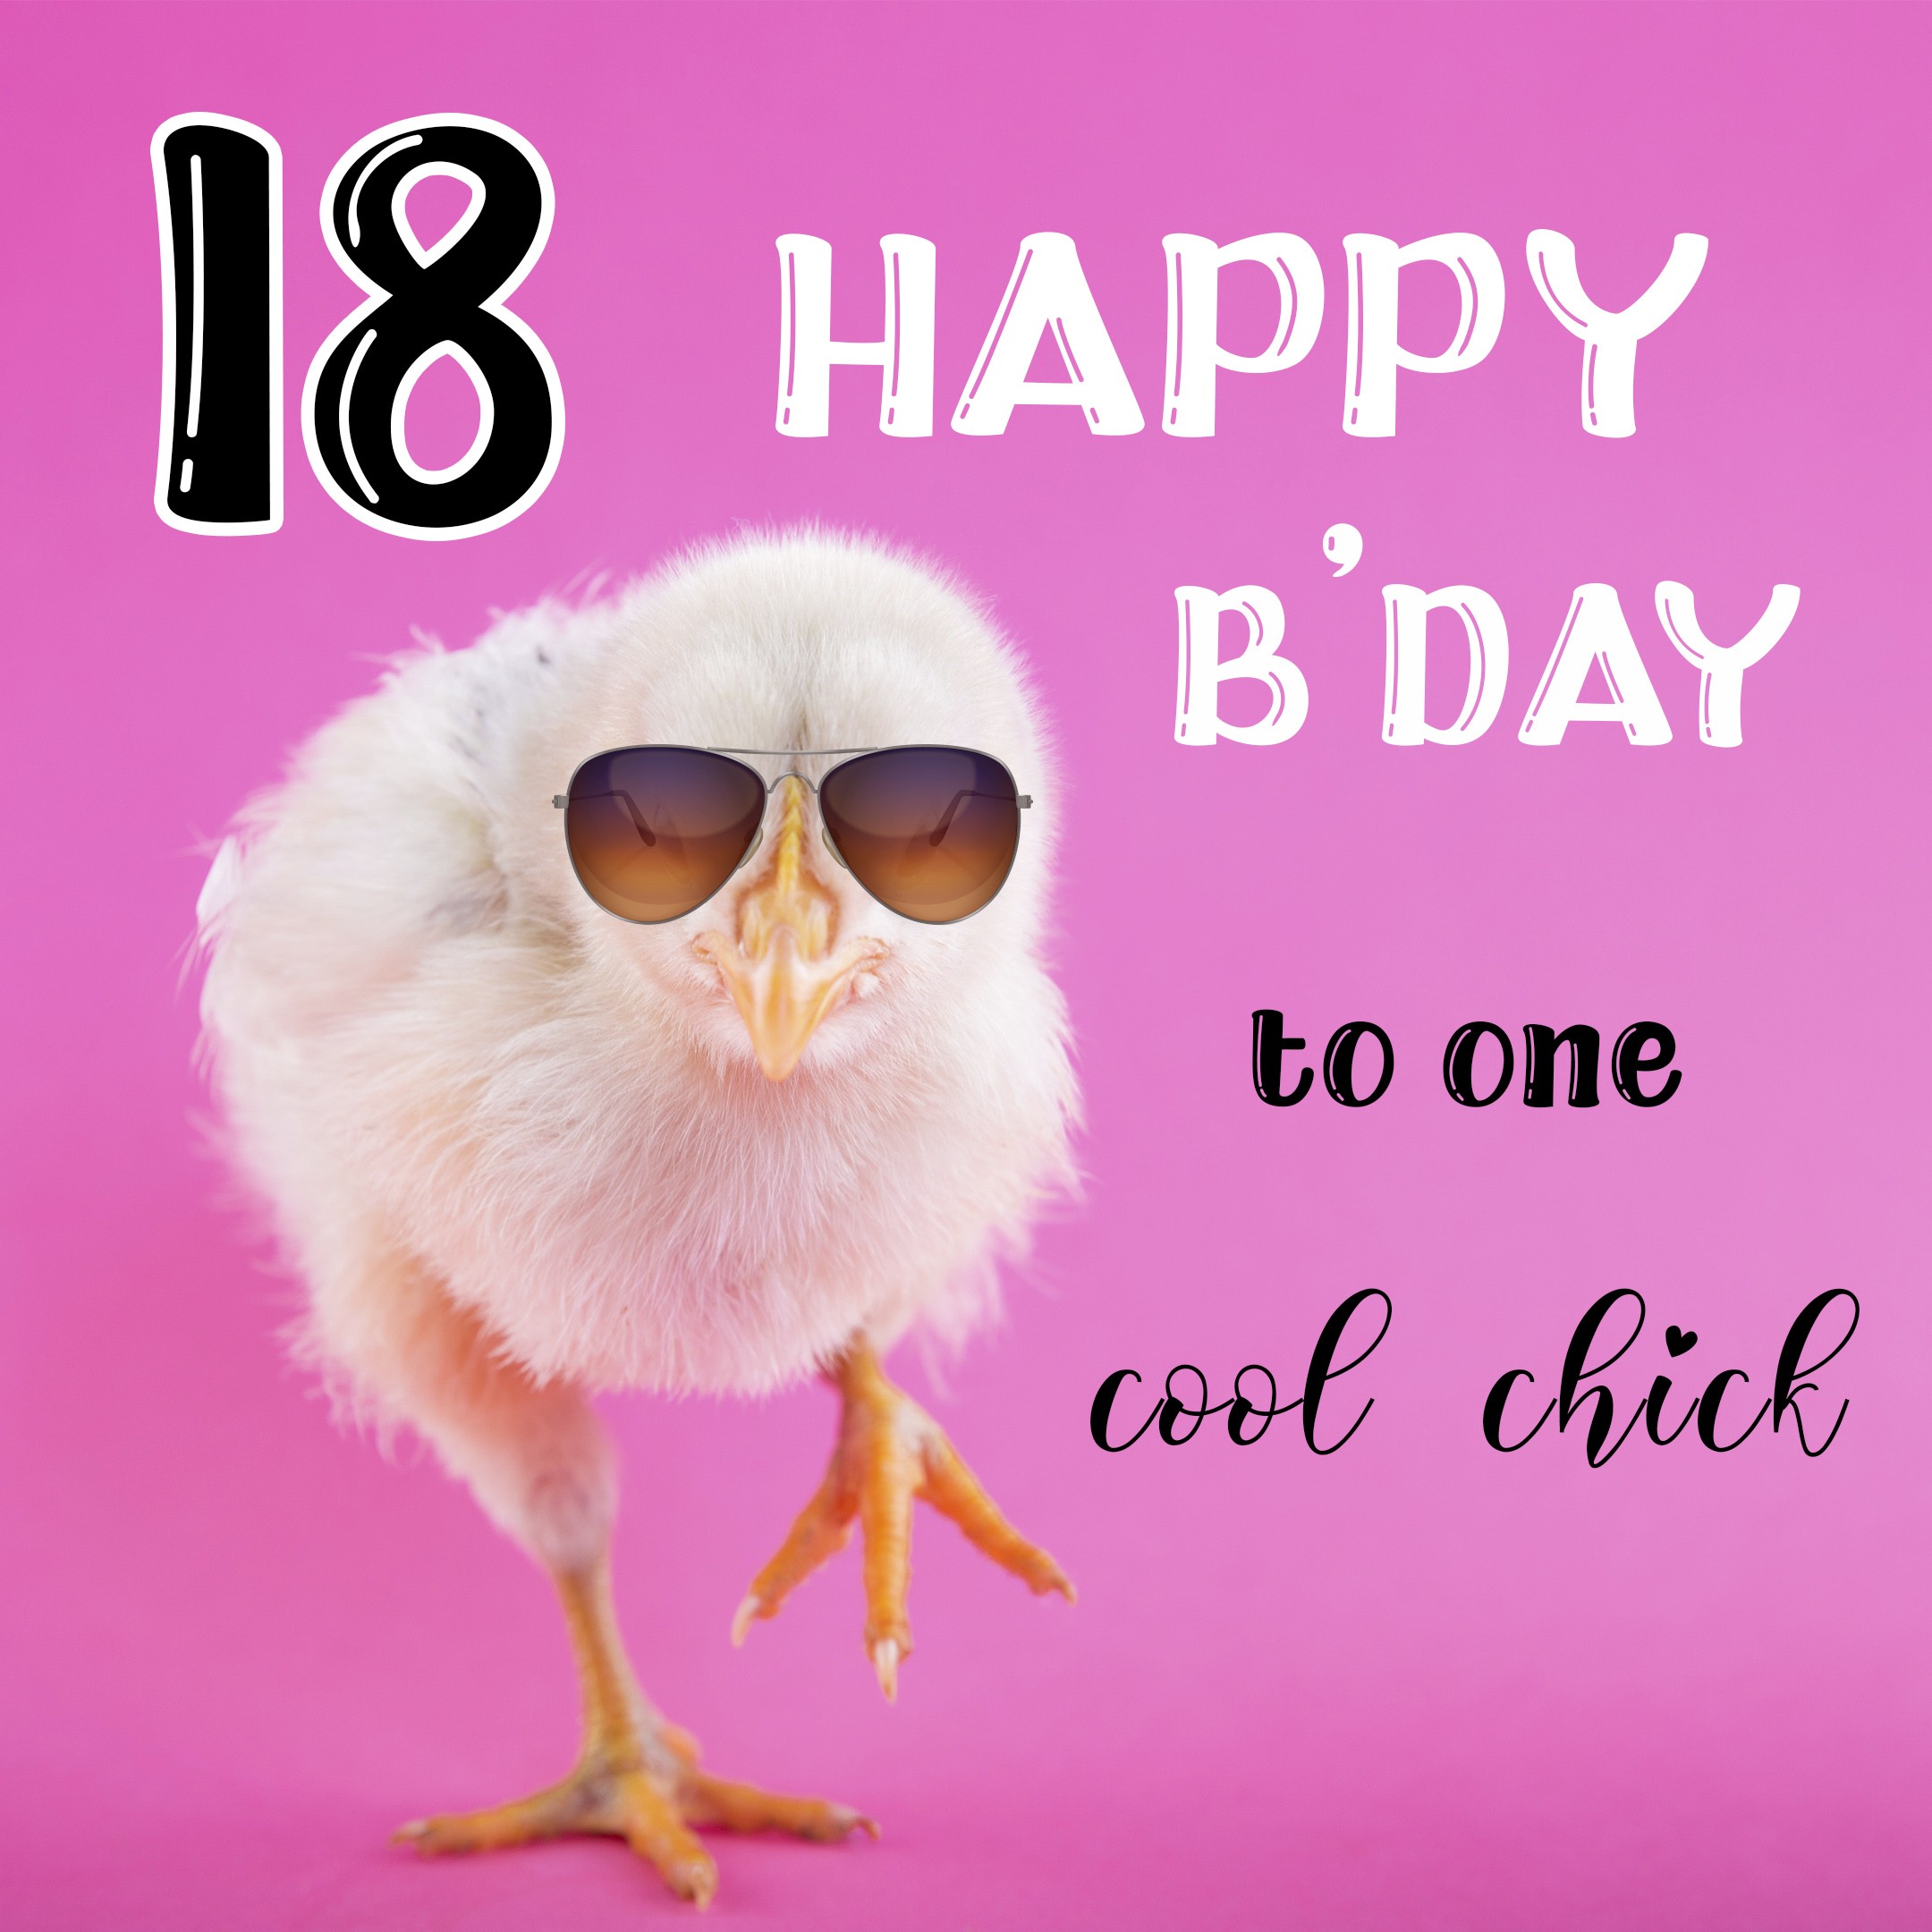 Free Funny 18th Years Happy Birthday Image With Chick - birthdayimg.com